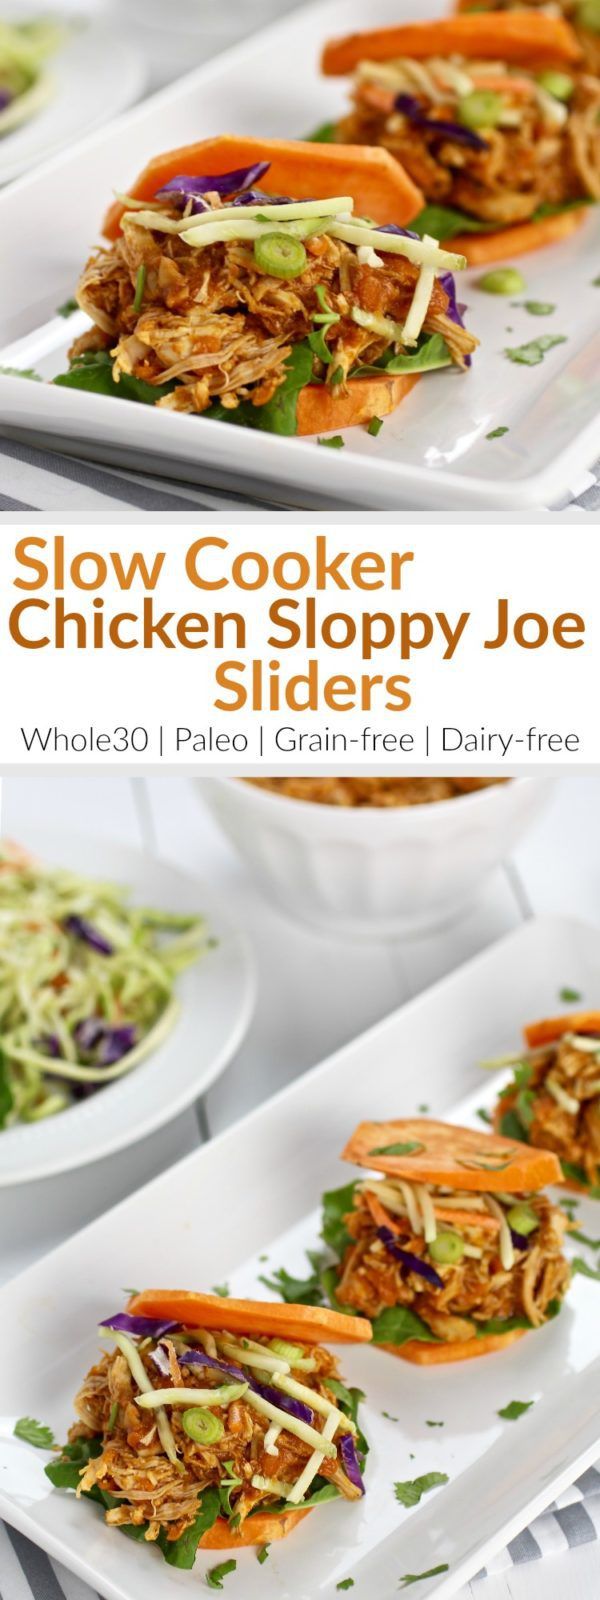 Slow Cooker Chicken Sloppy Joe Sliders